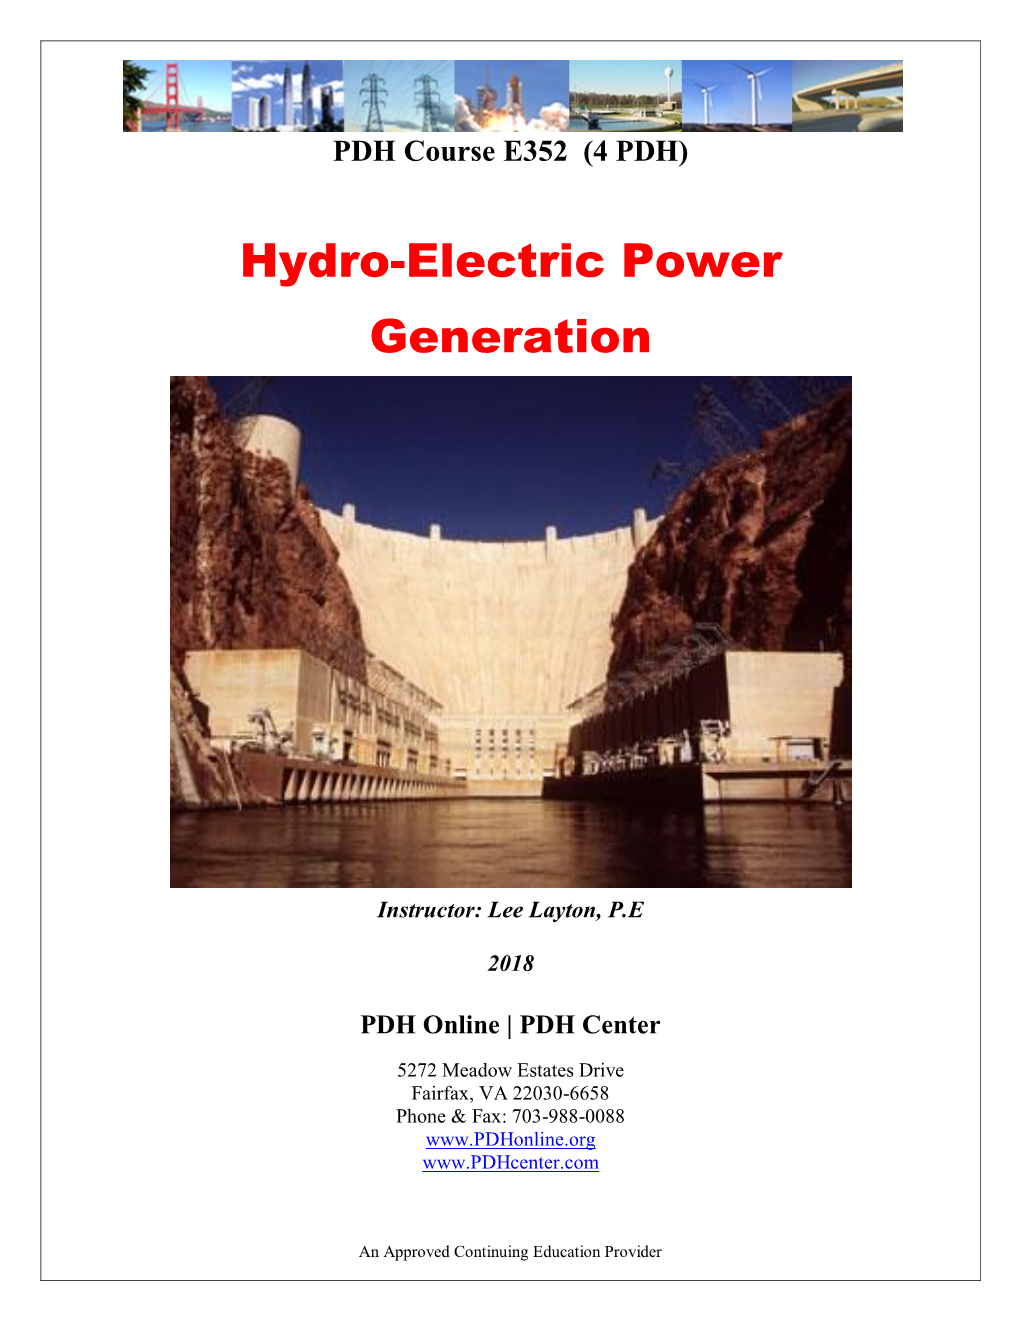 Hydro-Electric Power Generation